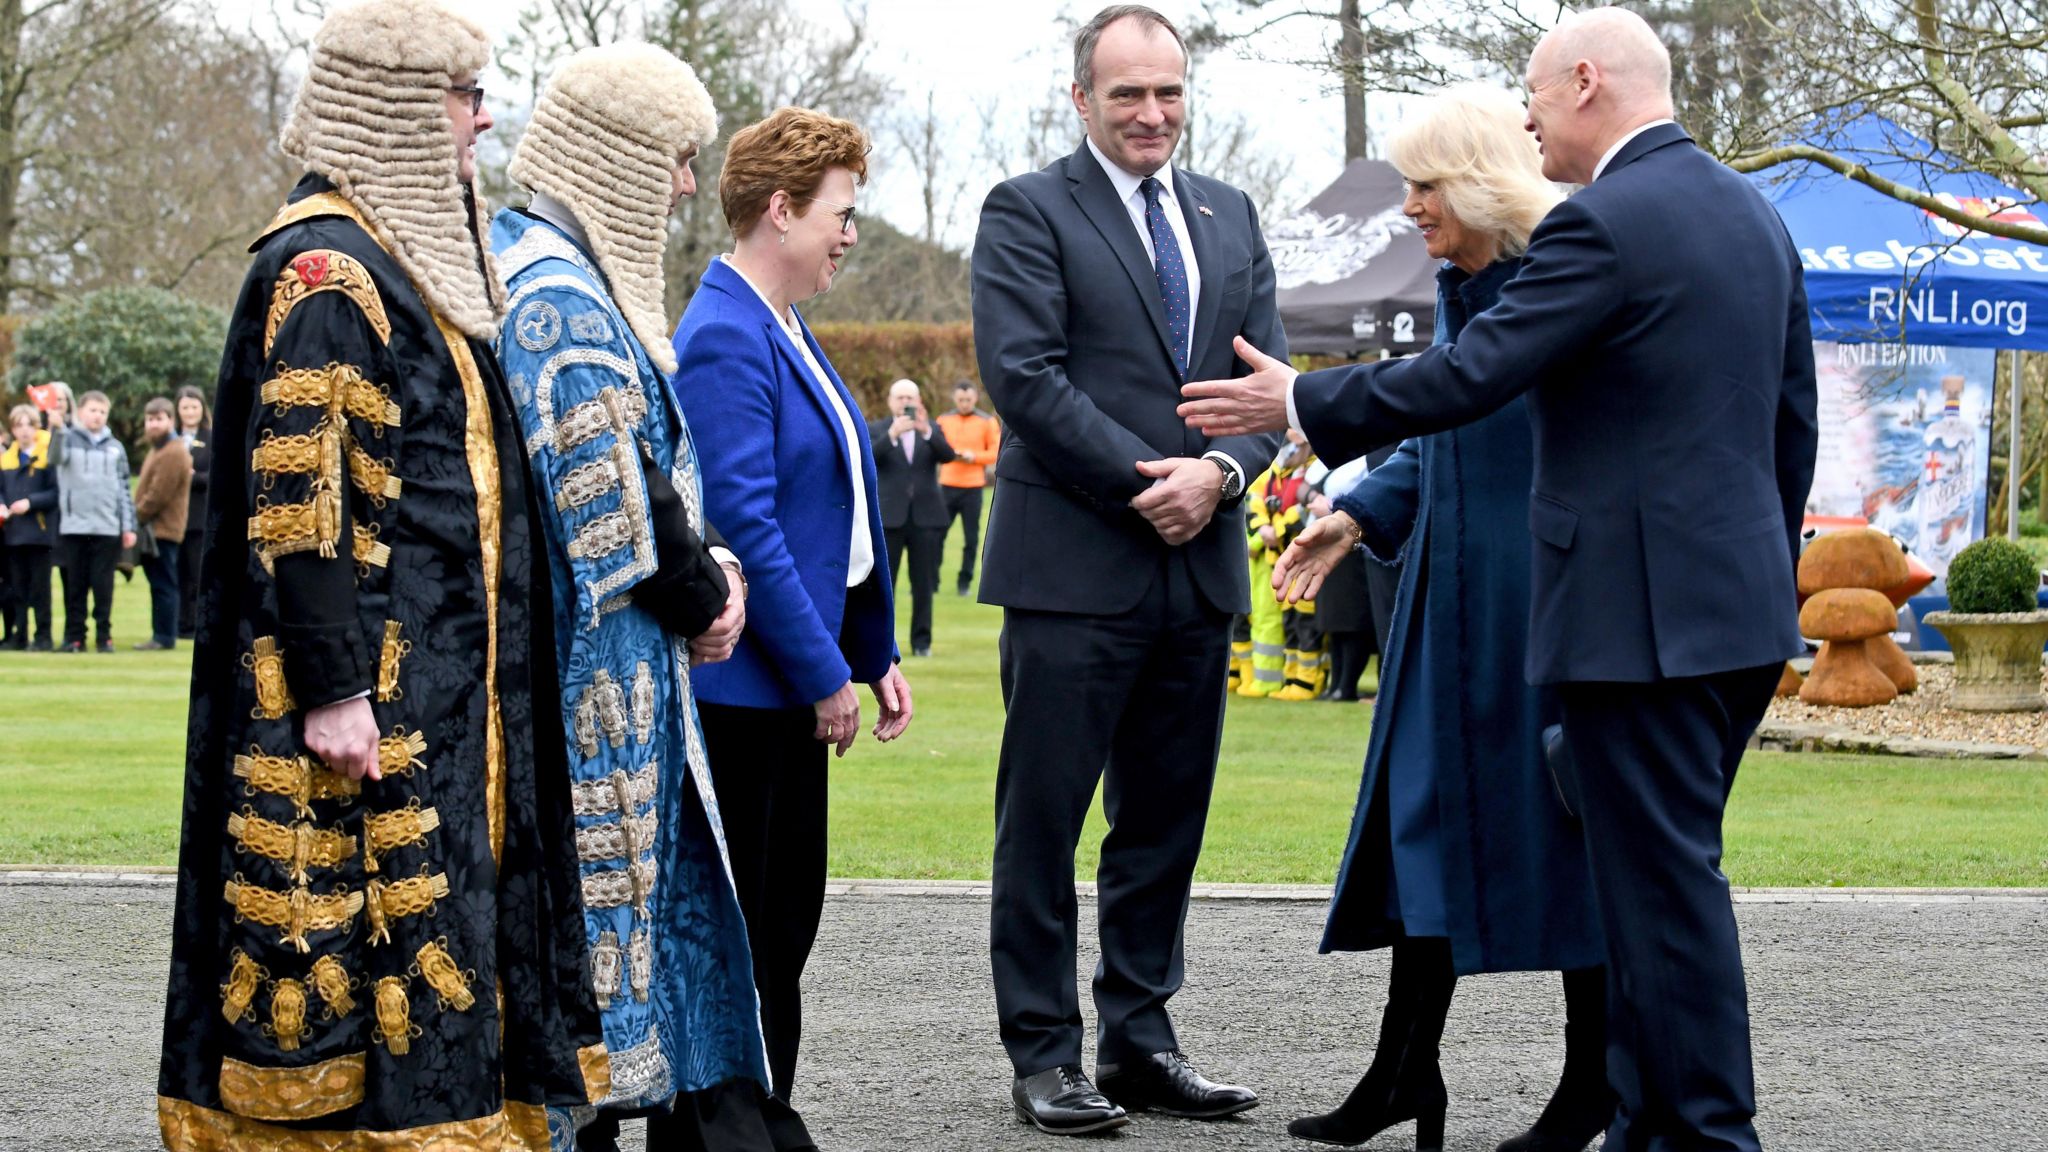 Senior politicians meeting the Queen Consort